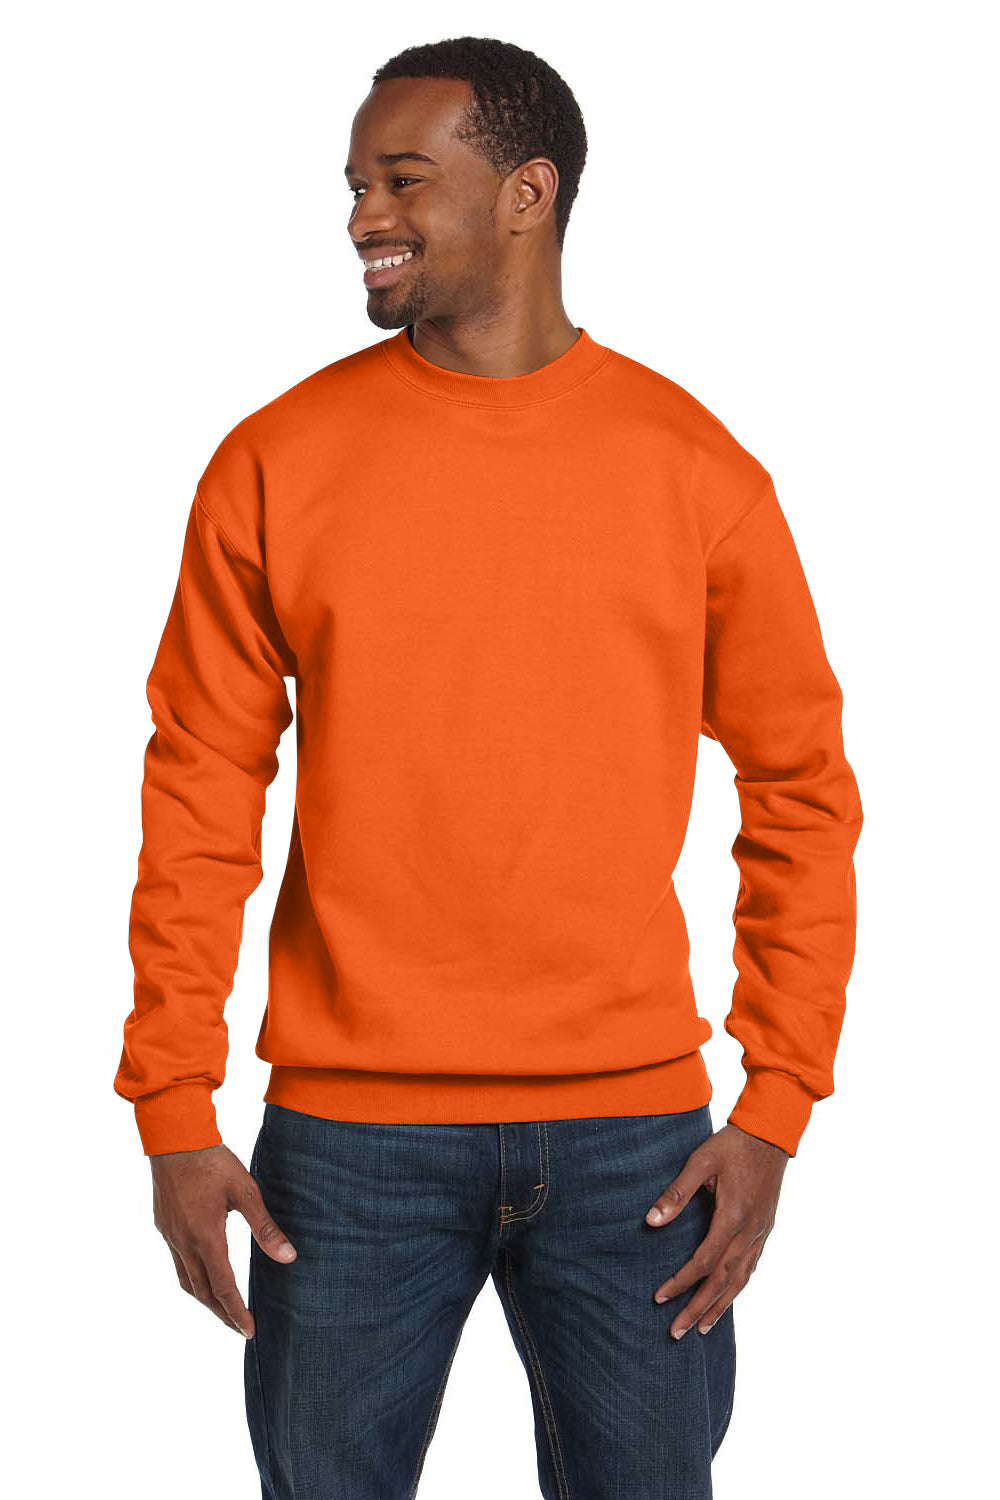 Hanes P160 EcoSmart Print Pro XP Fleece Crewneck Sweatshirt Orange Front